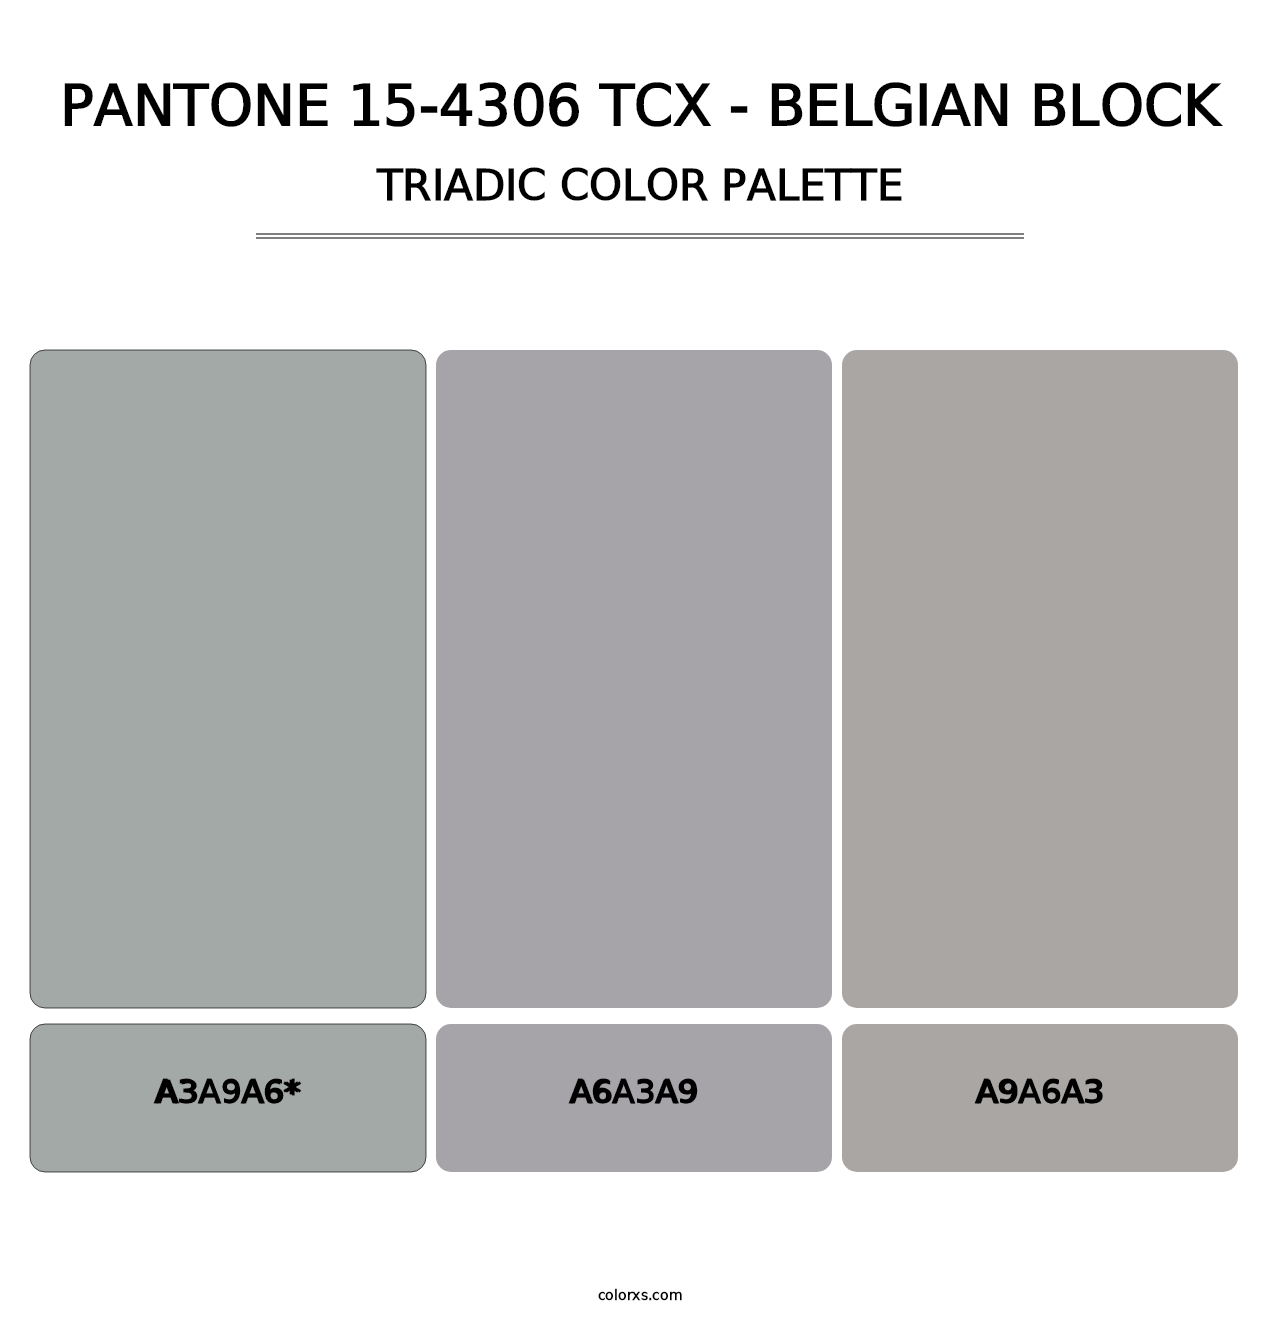 PANTONE 15-4306 TCX - Belgian Block - Triadic Color Palette